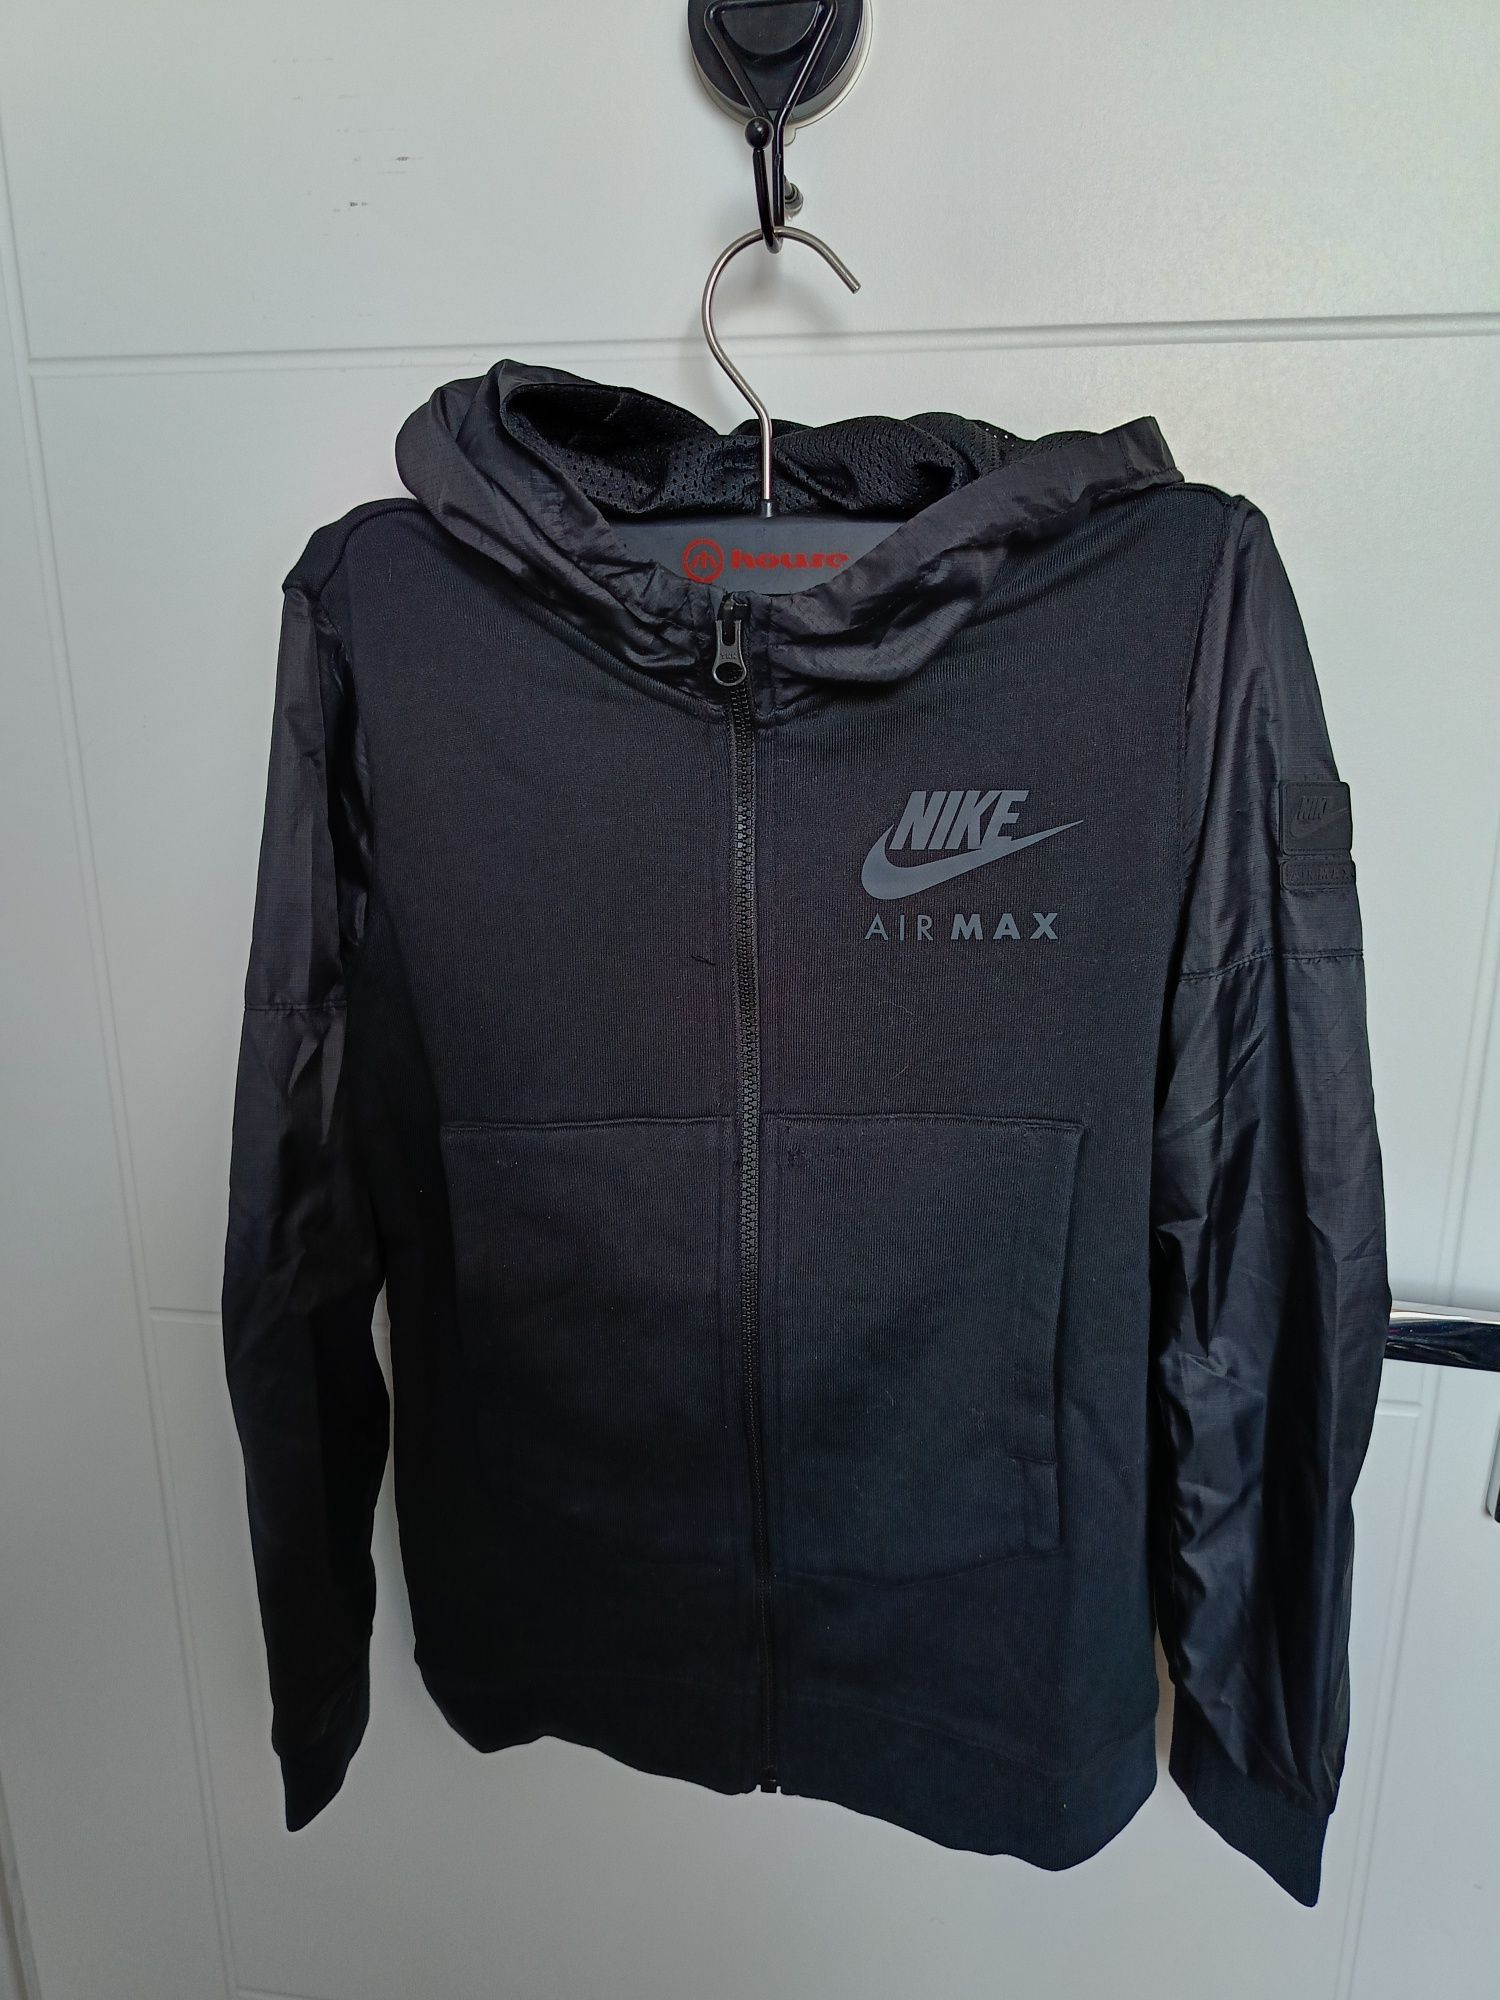 Bluza Nike air max 10-12 lat 146 czarna